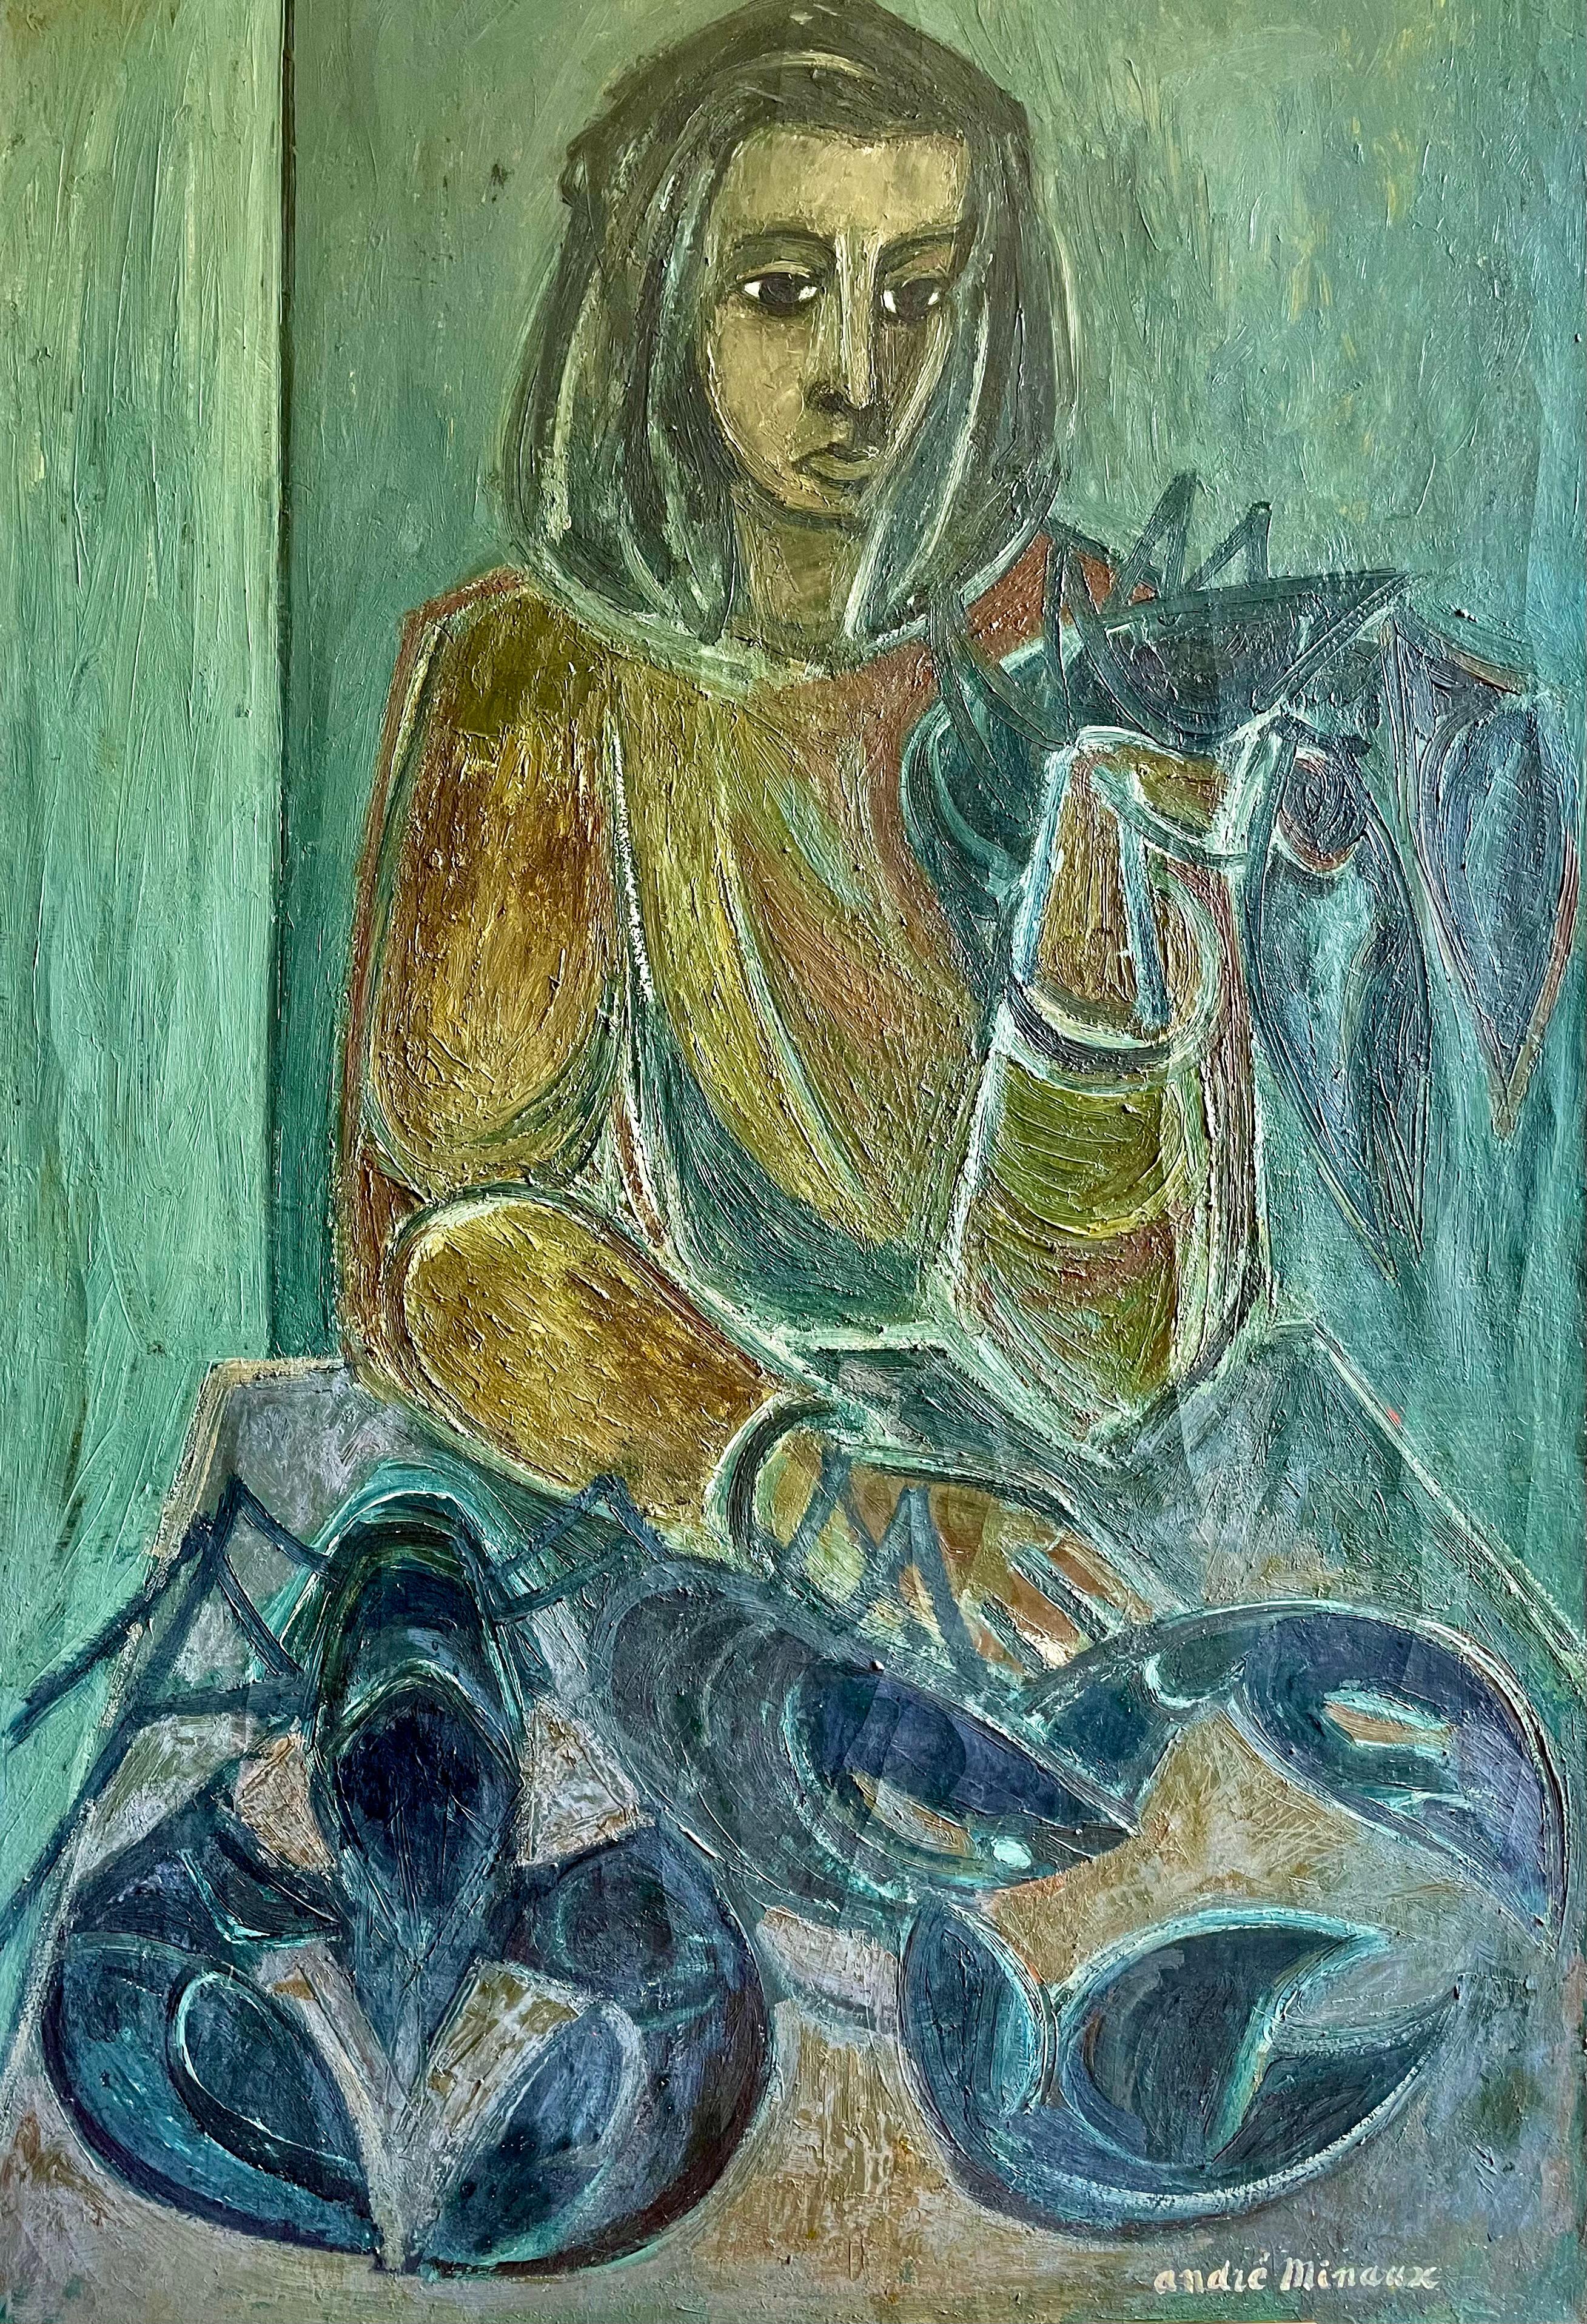 André Minaux Portrait Painting - Woman with Lobsters / "Femme et Homards" 